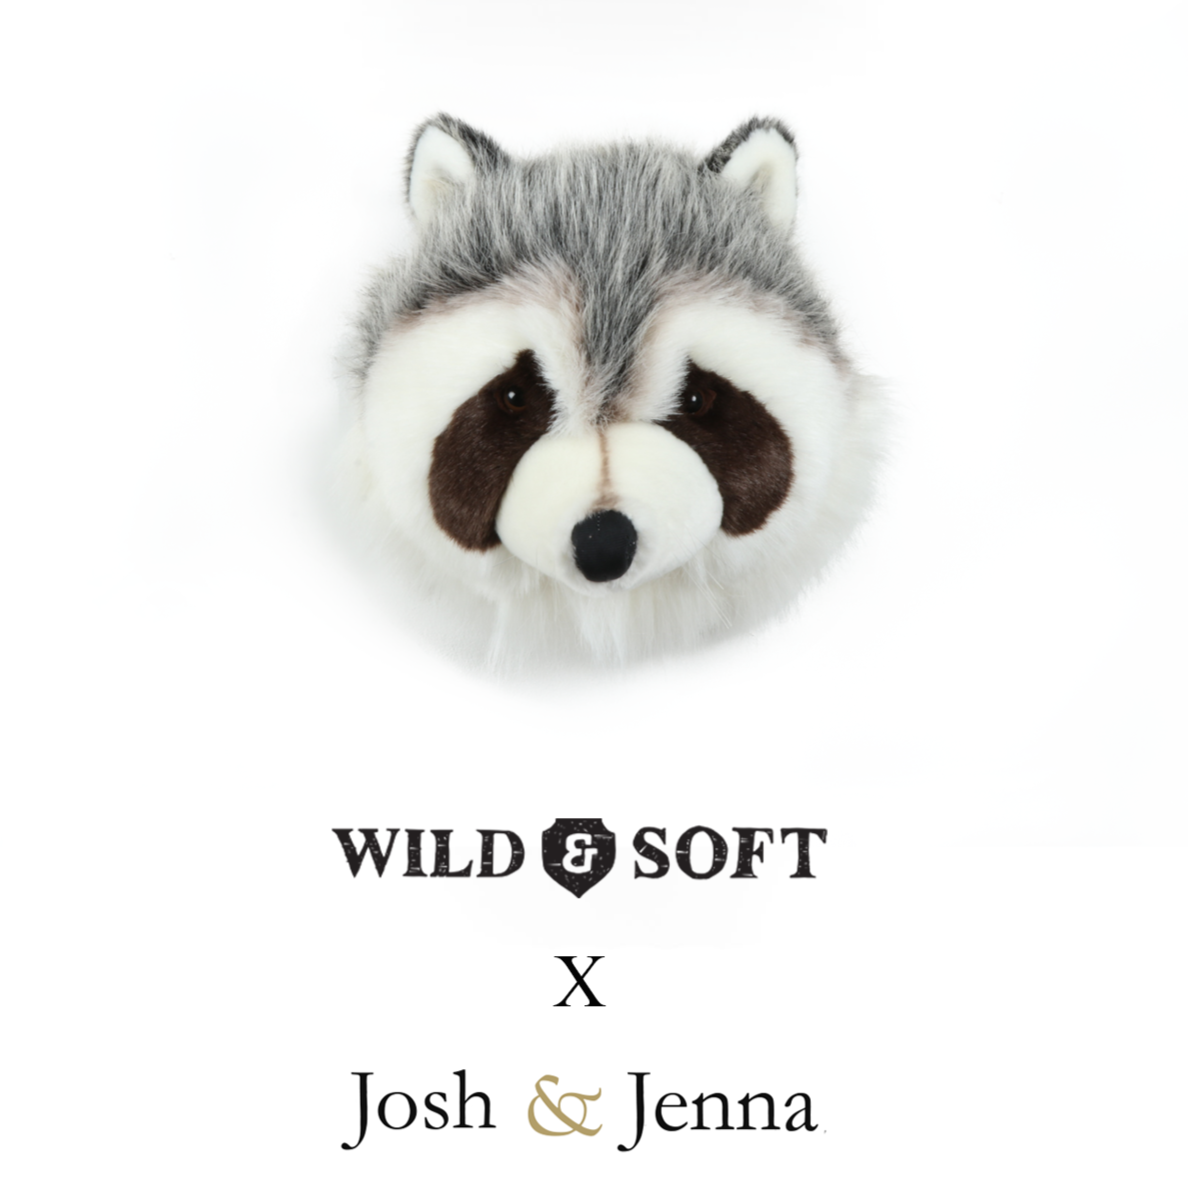 Wild & Soft X Josh & Jenna - Josh The Raccoon